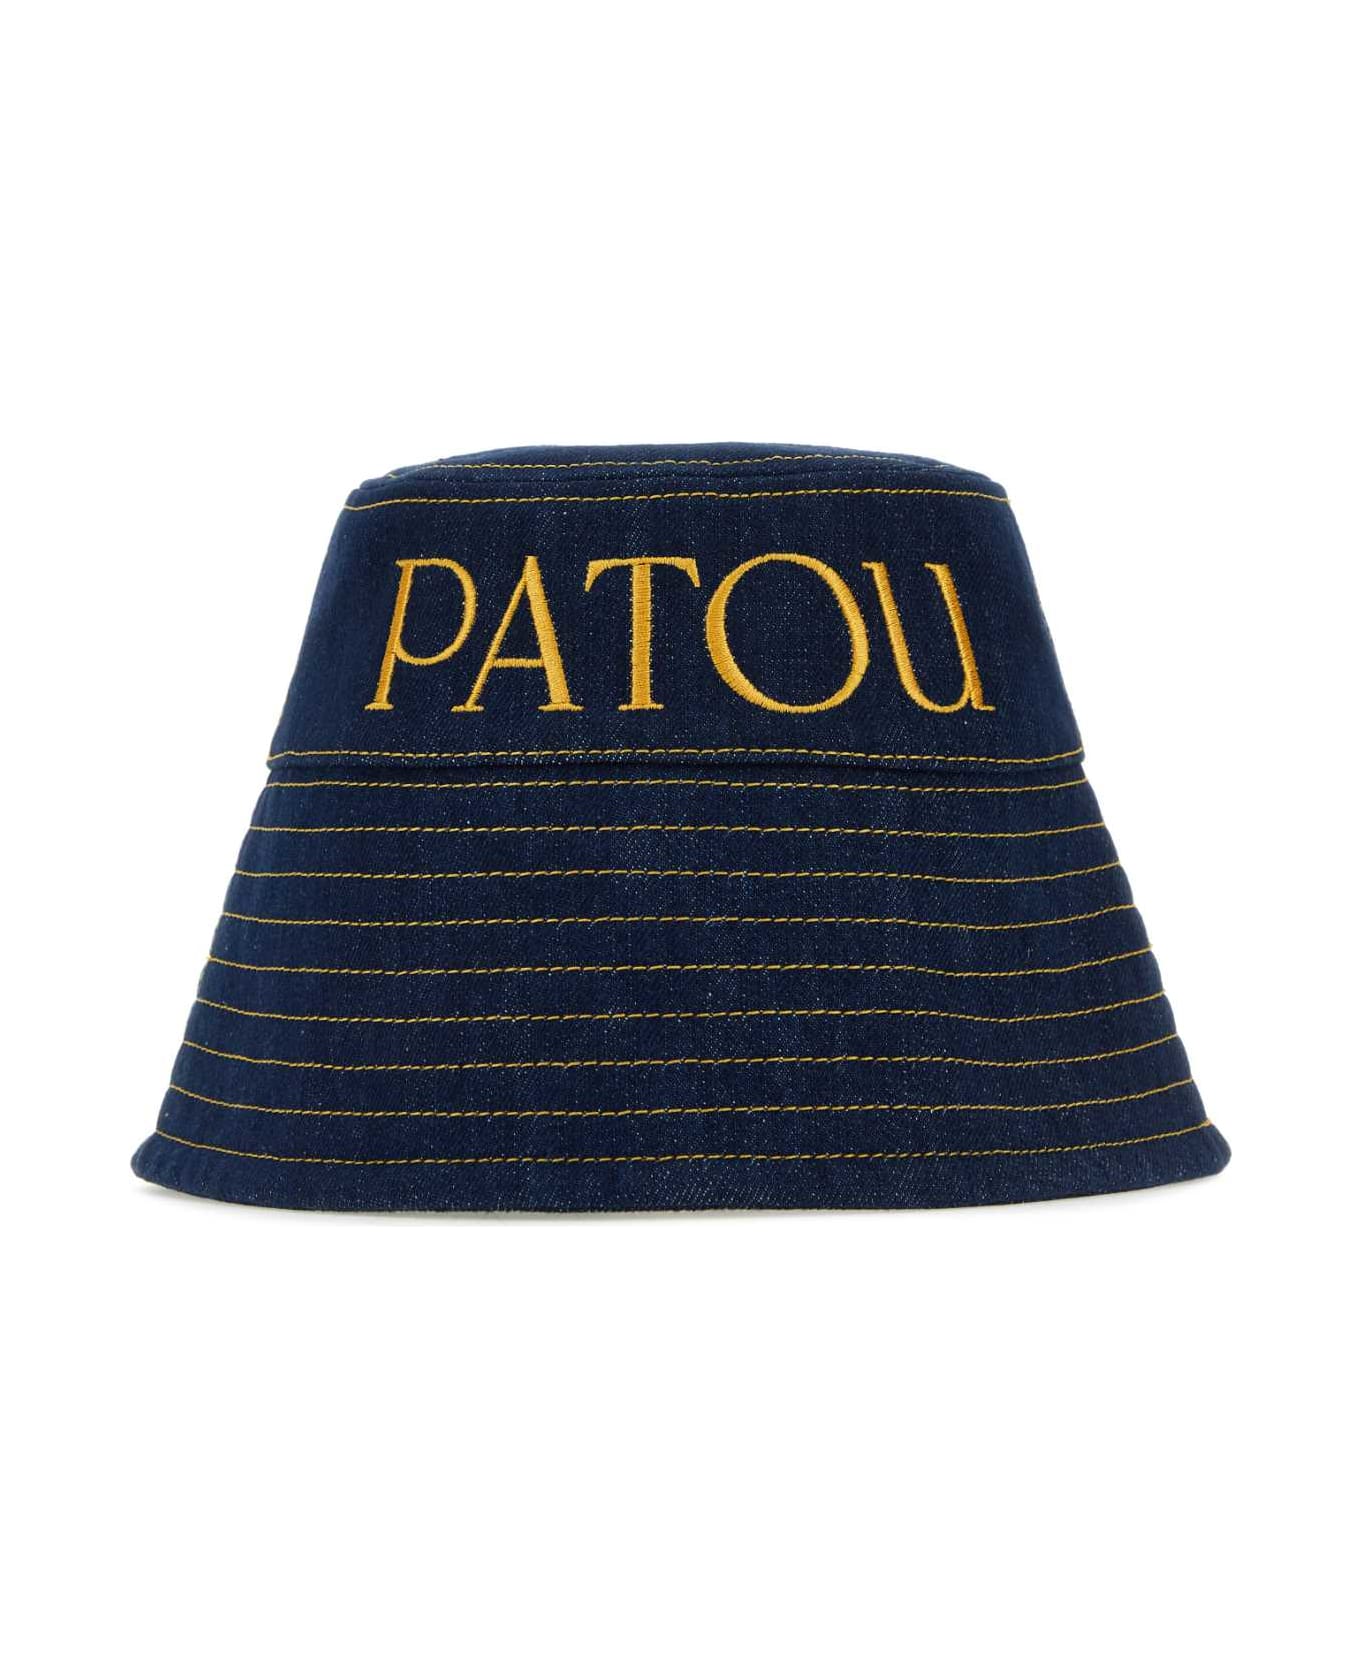 Patou Dark Blue Denim Hat - RODEO ヘアアクセサリー